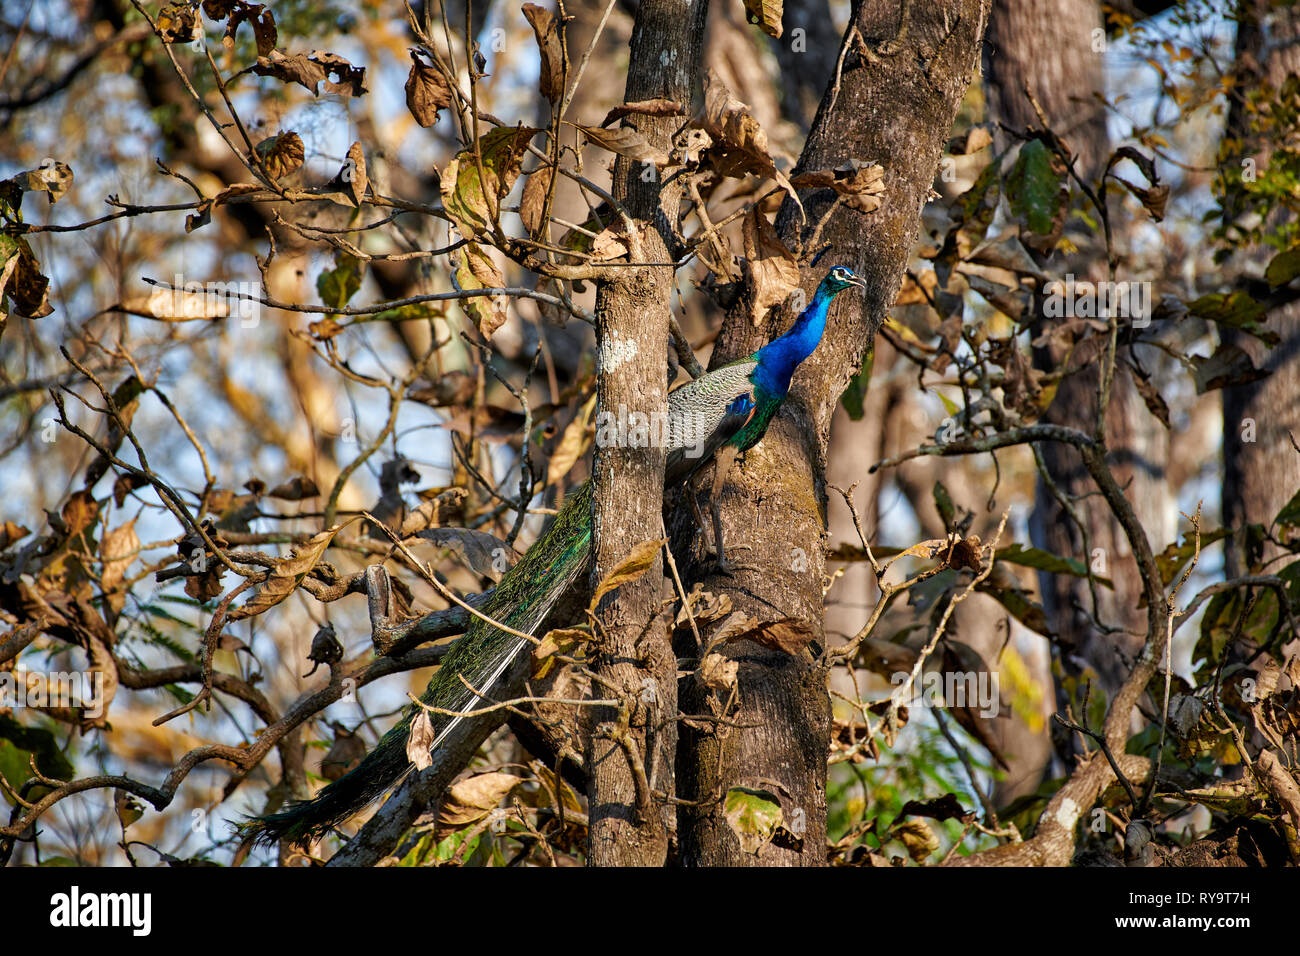 Common peacocksitting in a tree, Indian peafowl or blue peafowl, Pavo cristatus, Kabini, Nagarhole Tiger Reserve, Karnataka, India Stock Photo